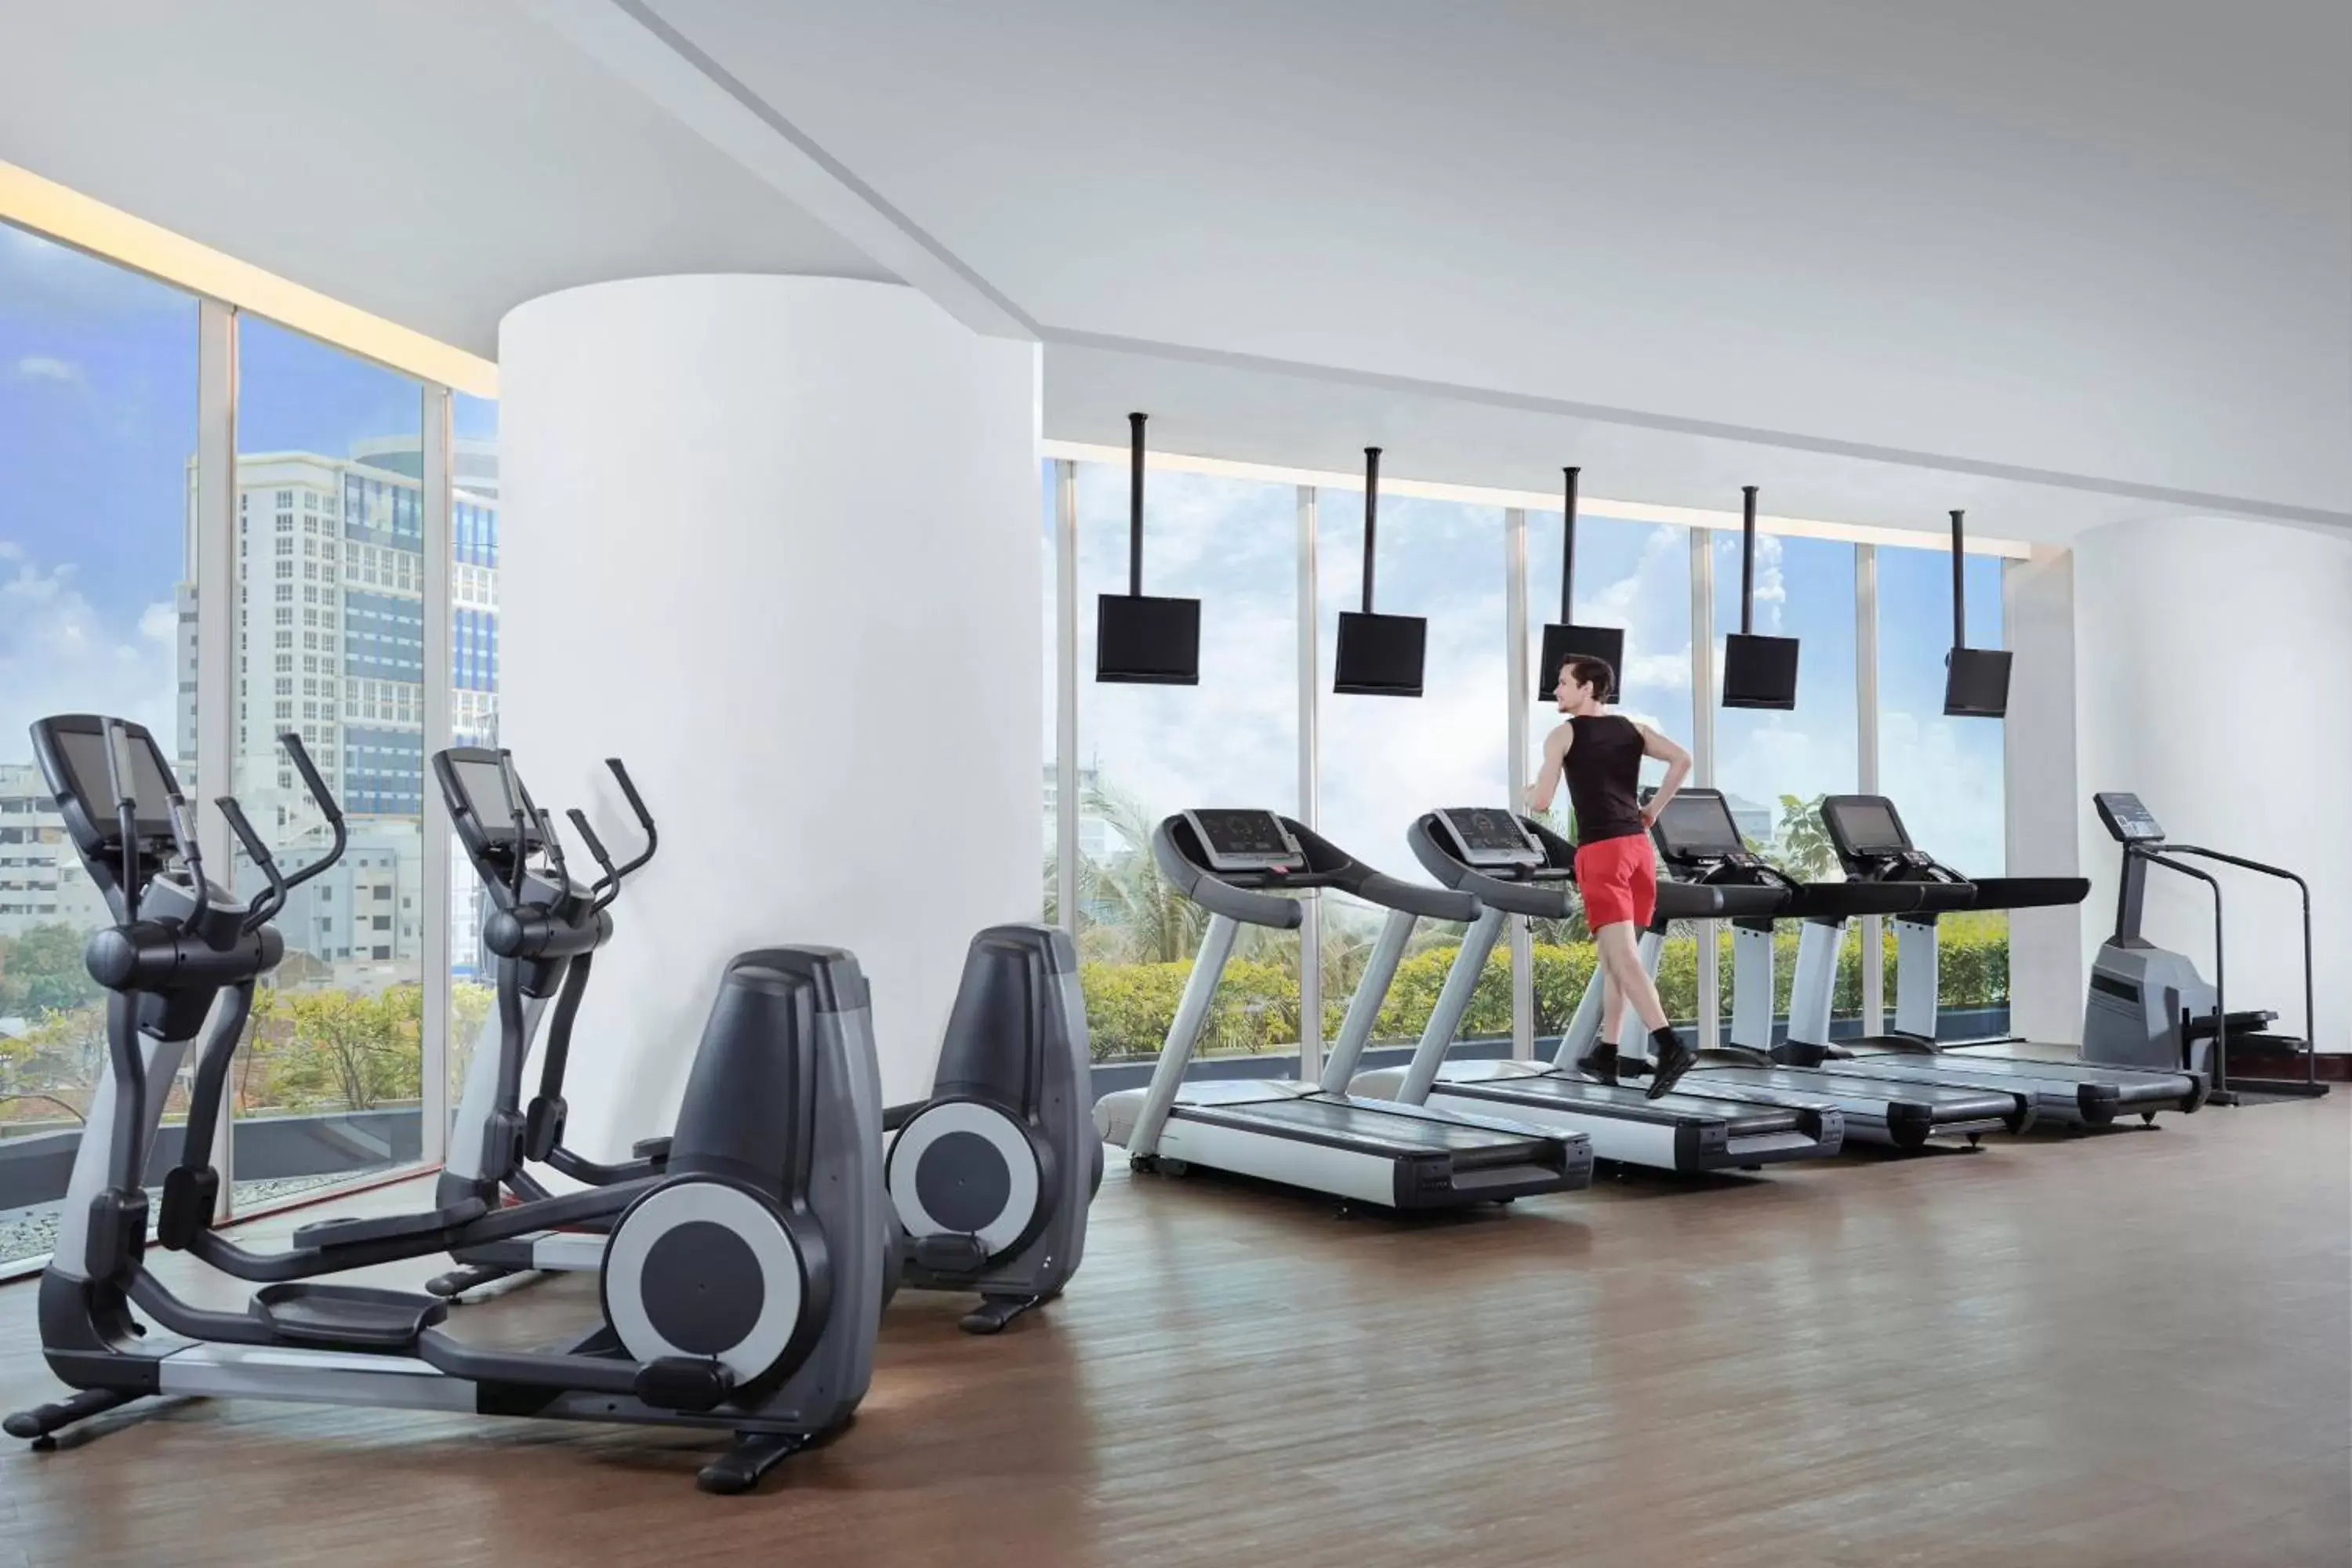 Fitness centre/facilities, Fitness Center/Facilities in JW Marriott Hotel Surabaya